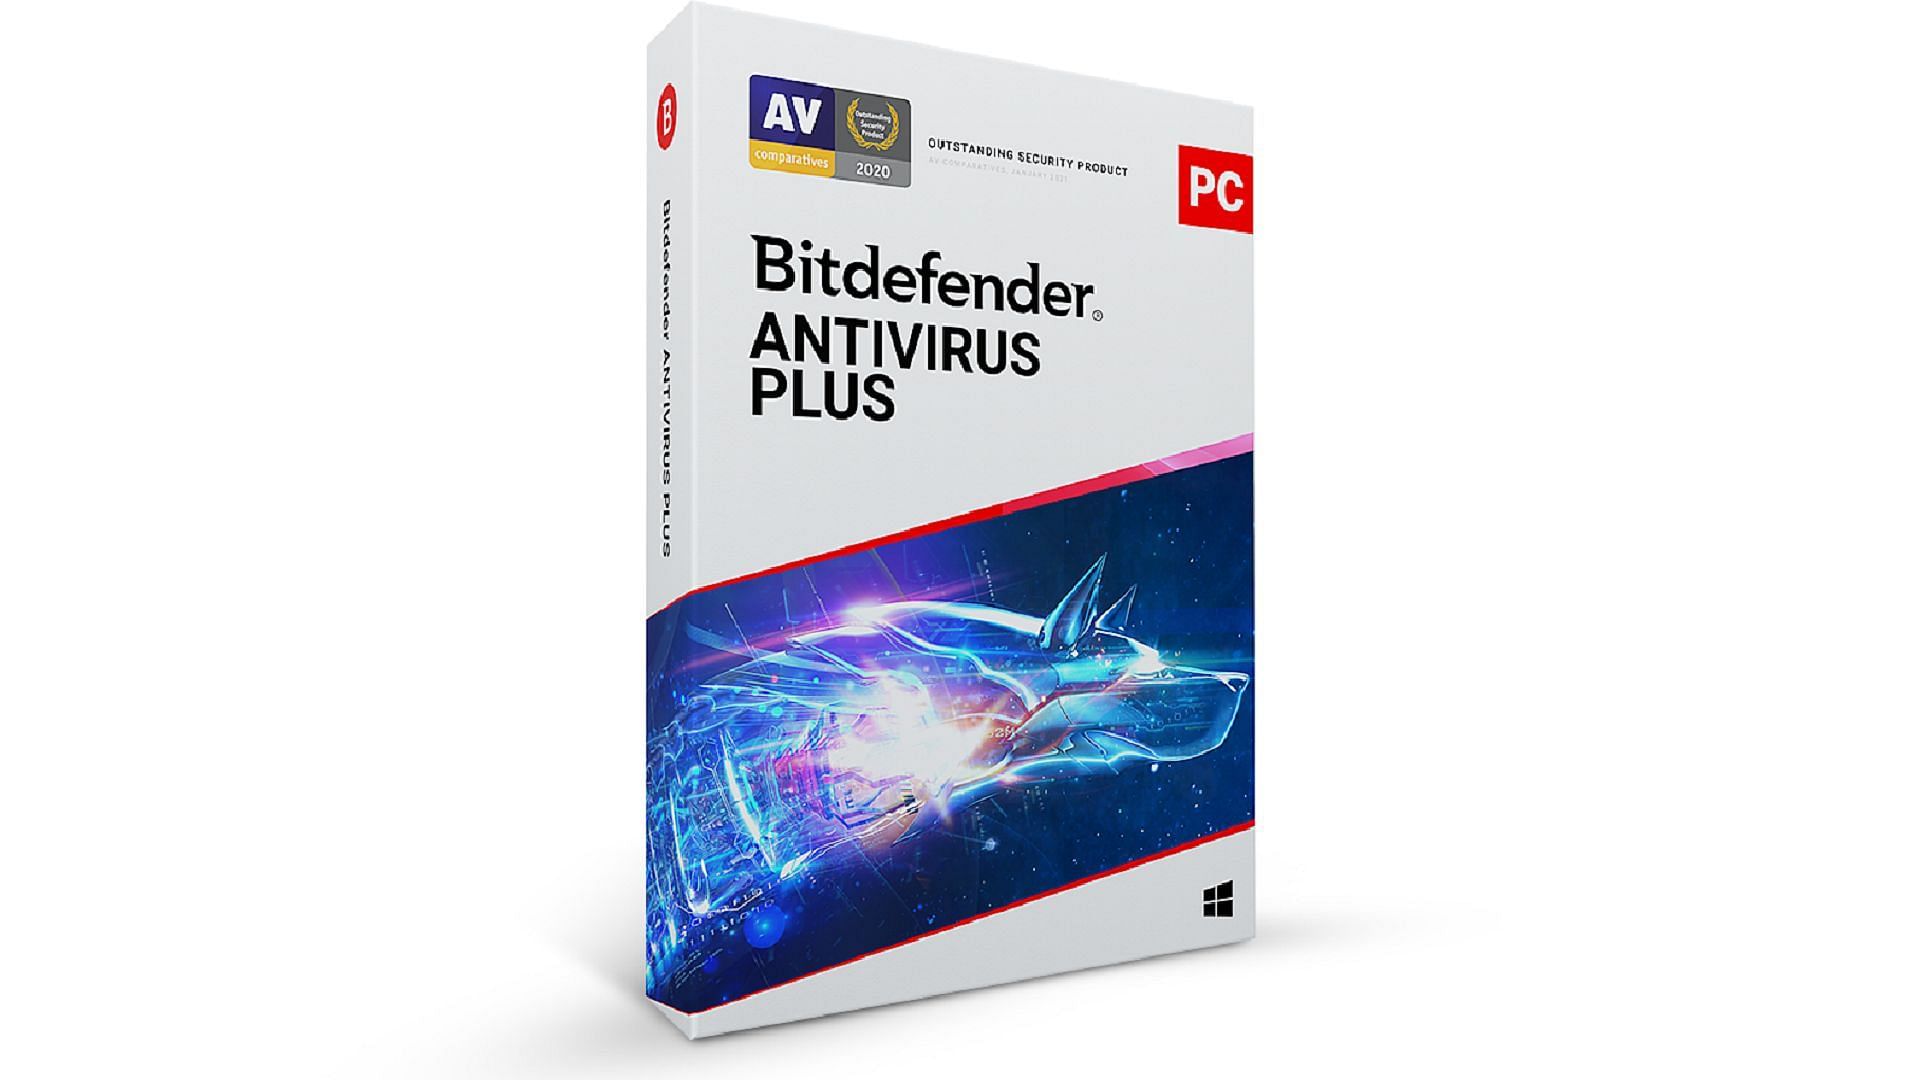 Bitdefender Antivirus Plus won the Product of the Year award in 2020 (Image via Bitdefender)